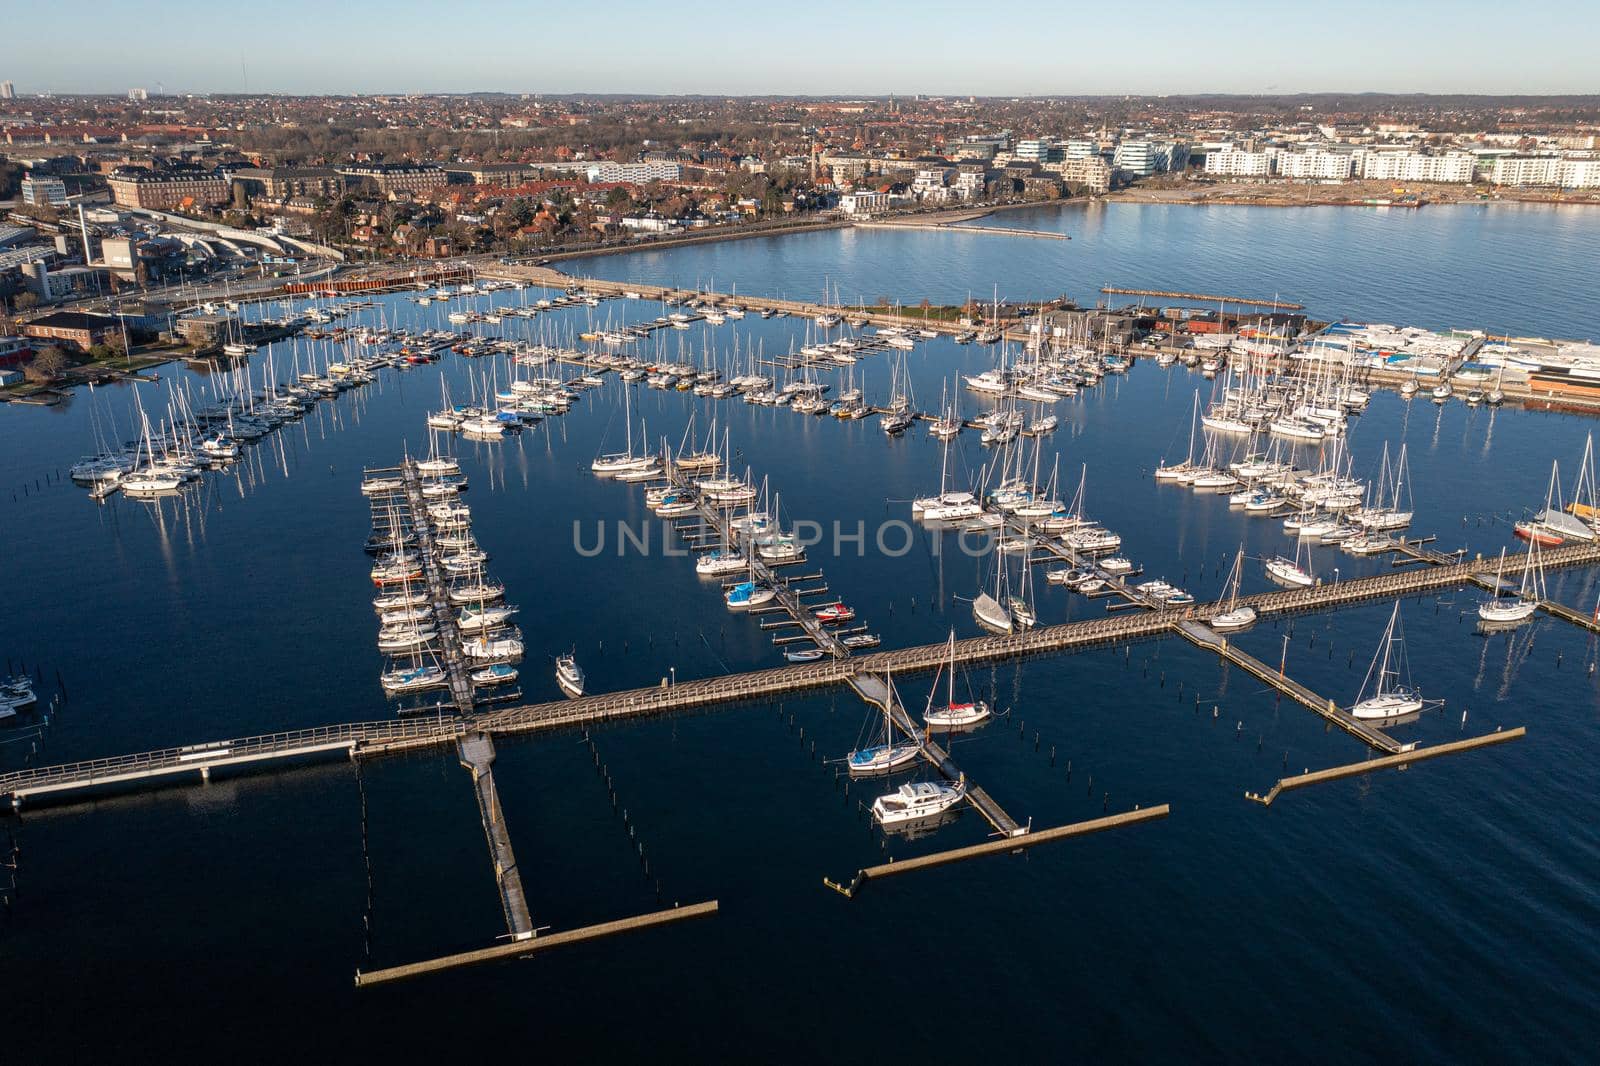 Aerial View of Svanemolle Sailboat Harbor in Copenhagen by oliverfoerstner